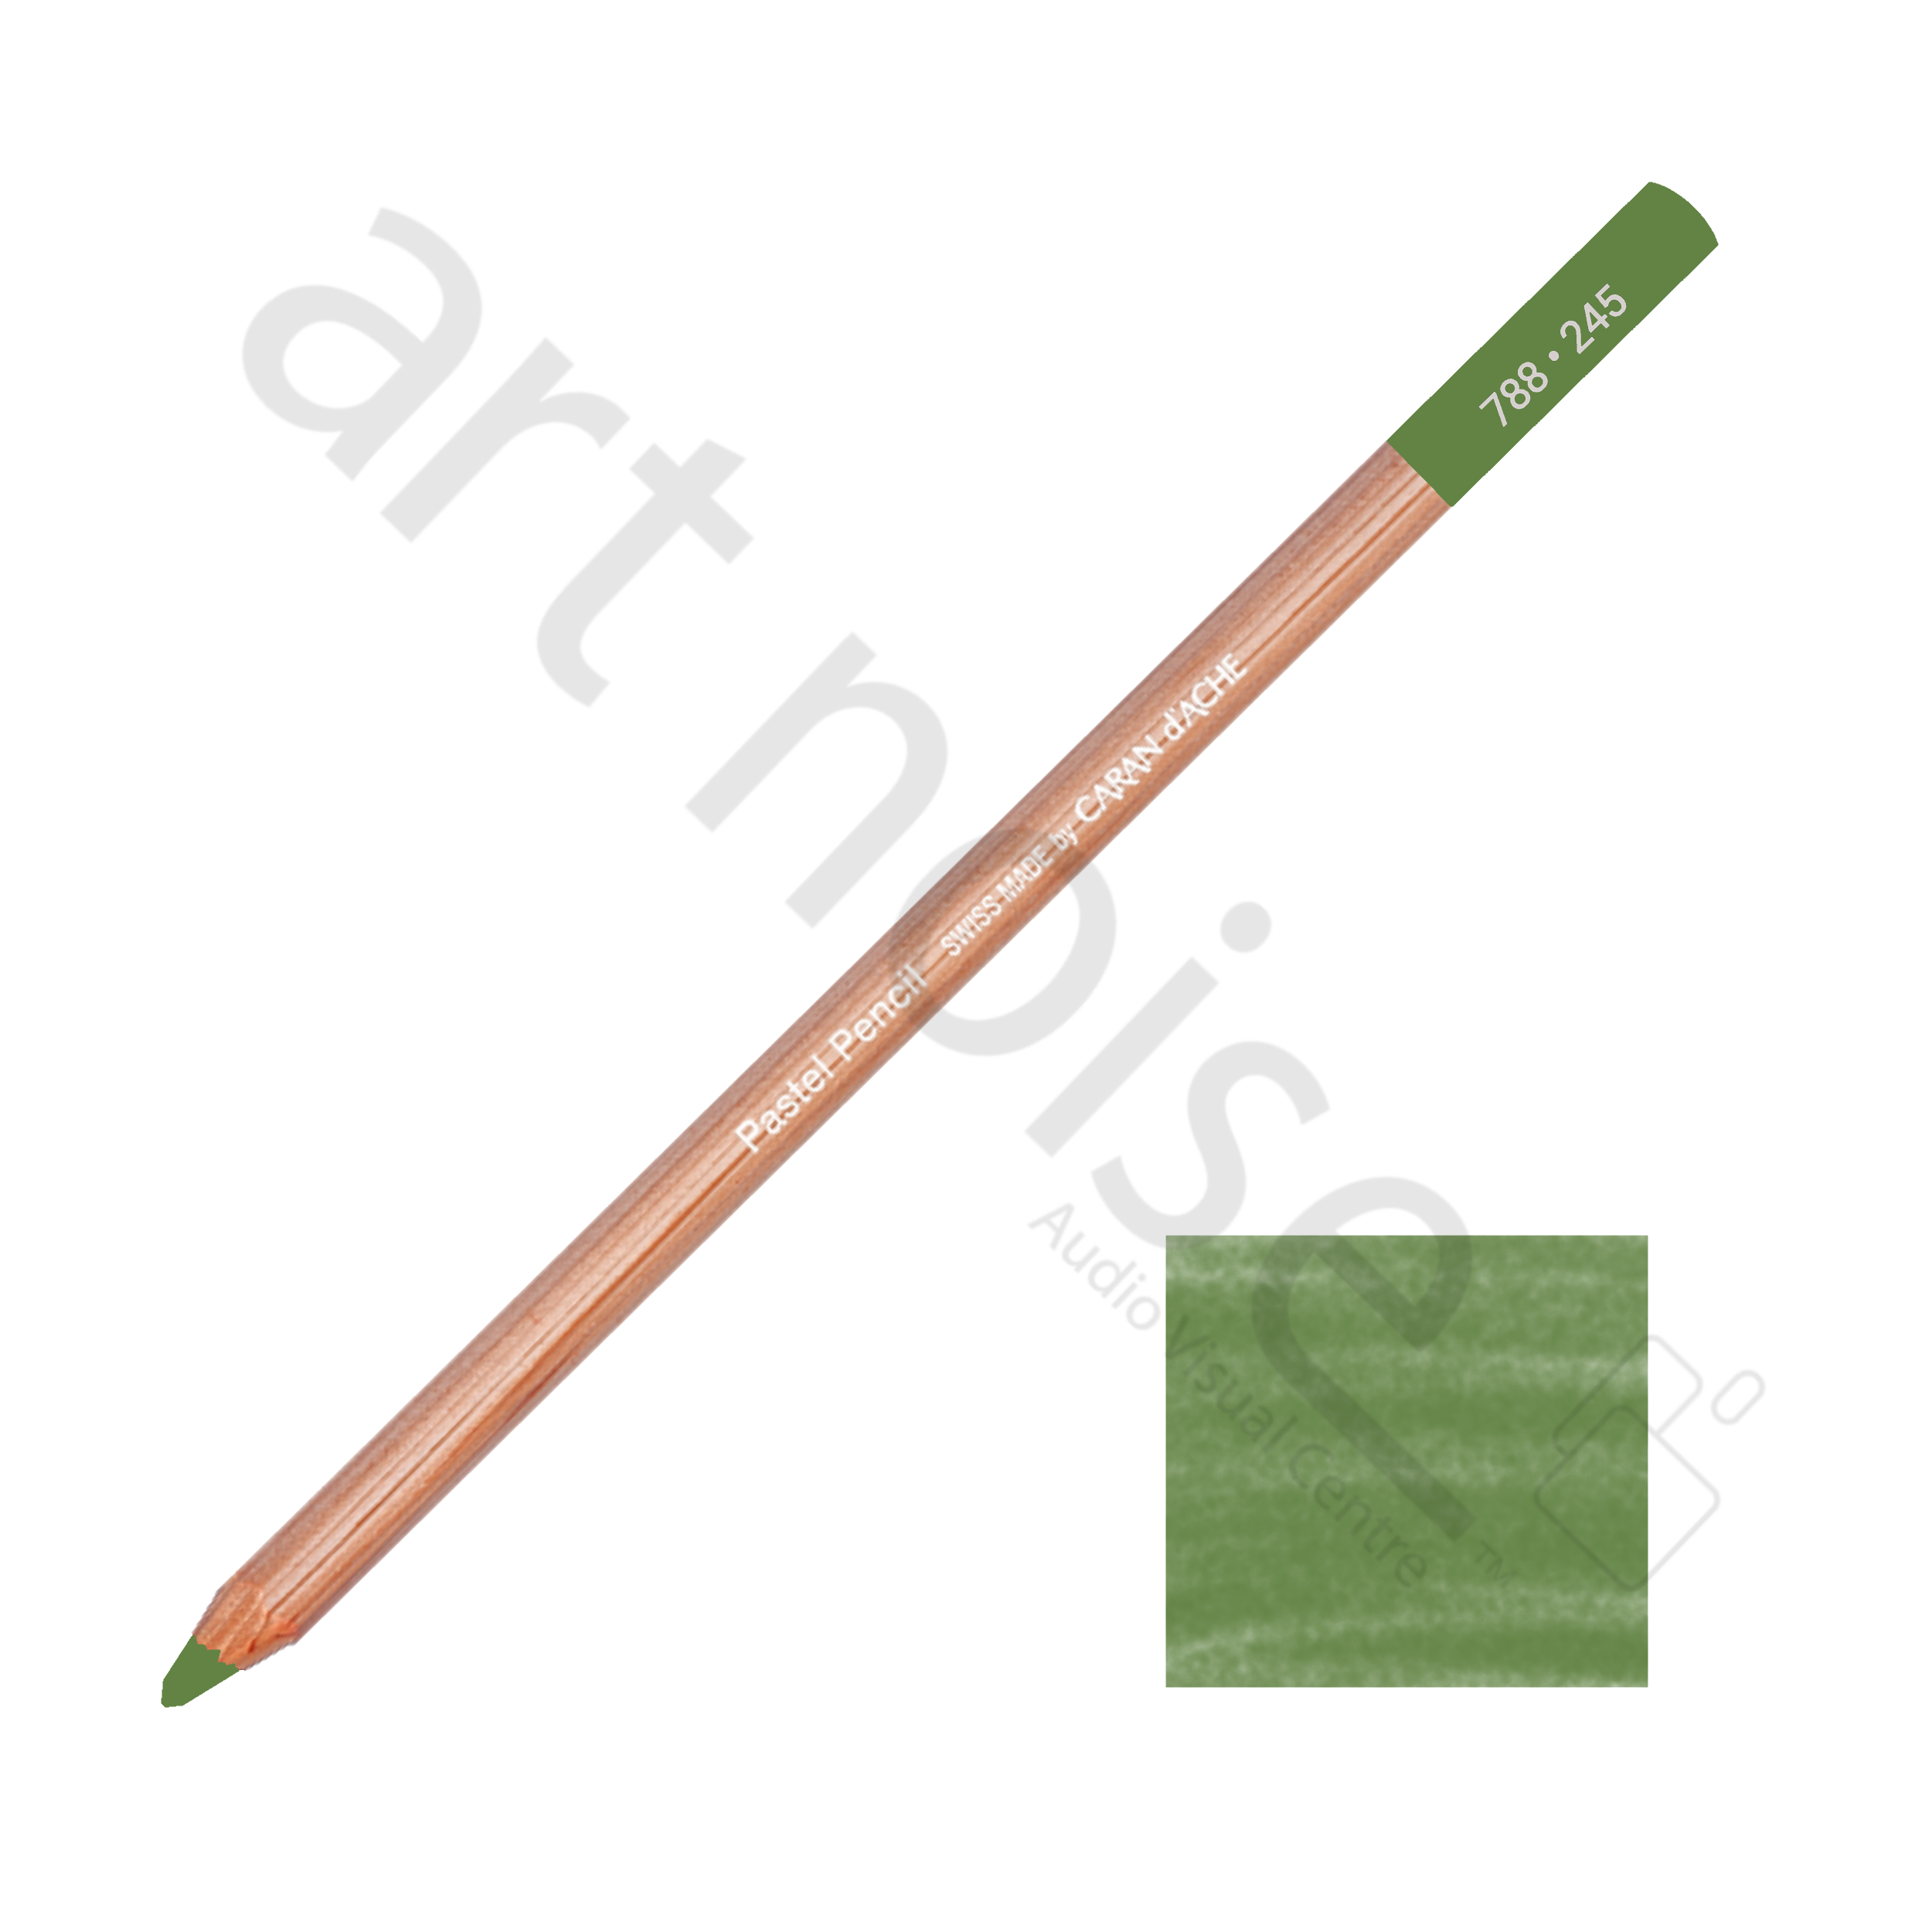 Caran D'Ache : Pastel Pencils